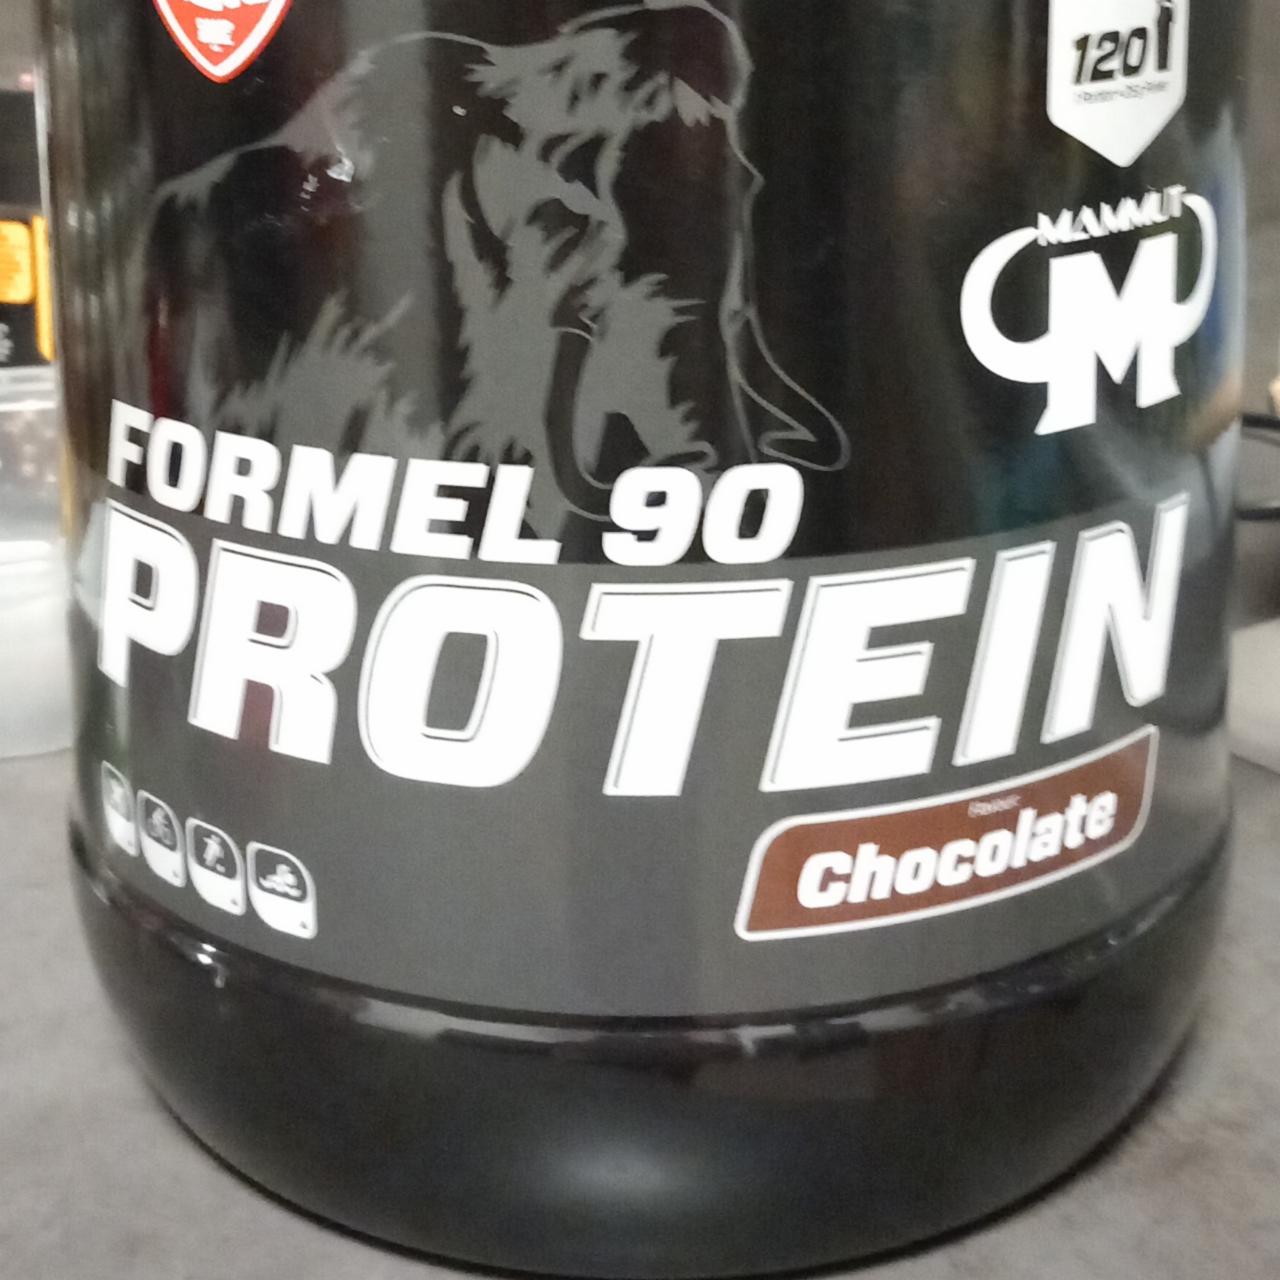 Fotografie - Formel 90 Protein chocolate Mamut